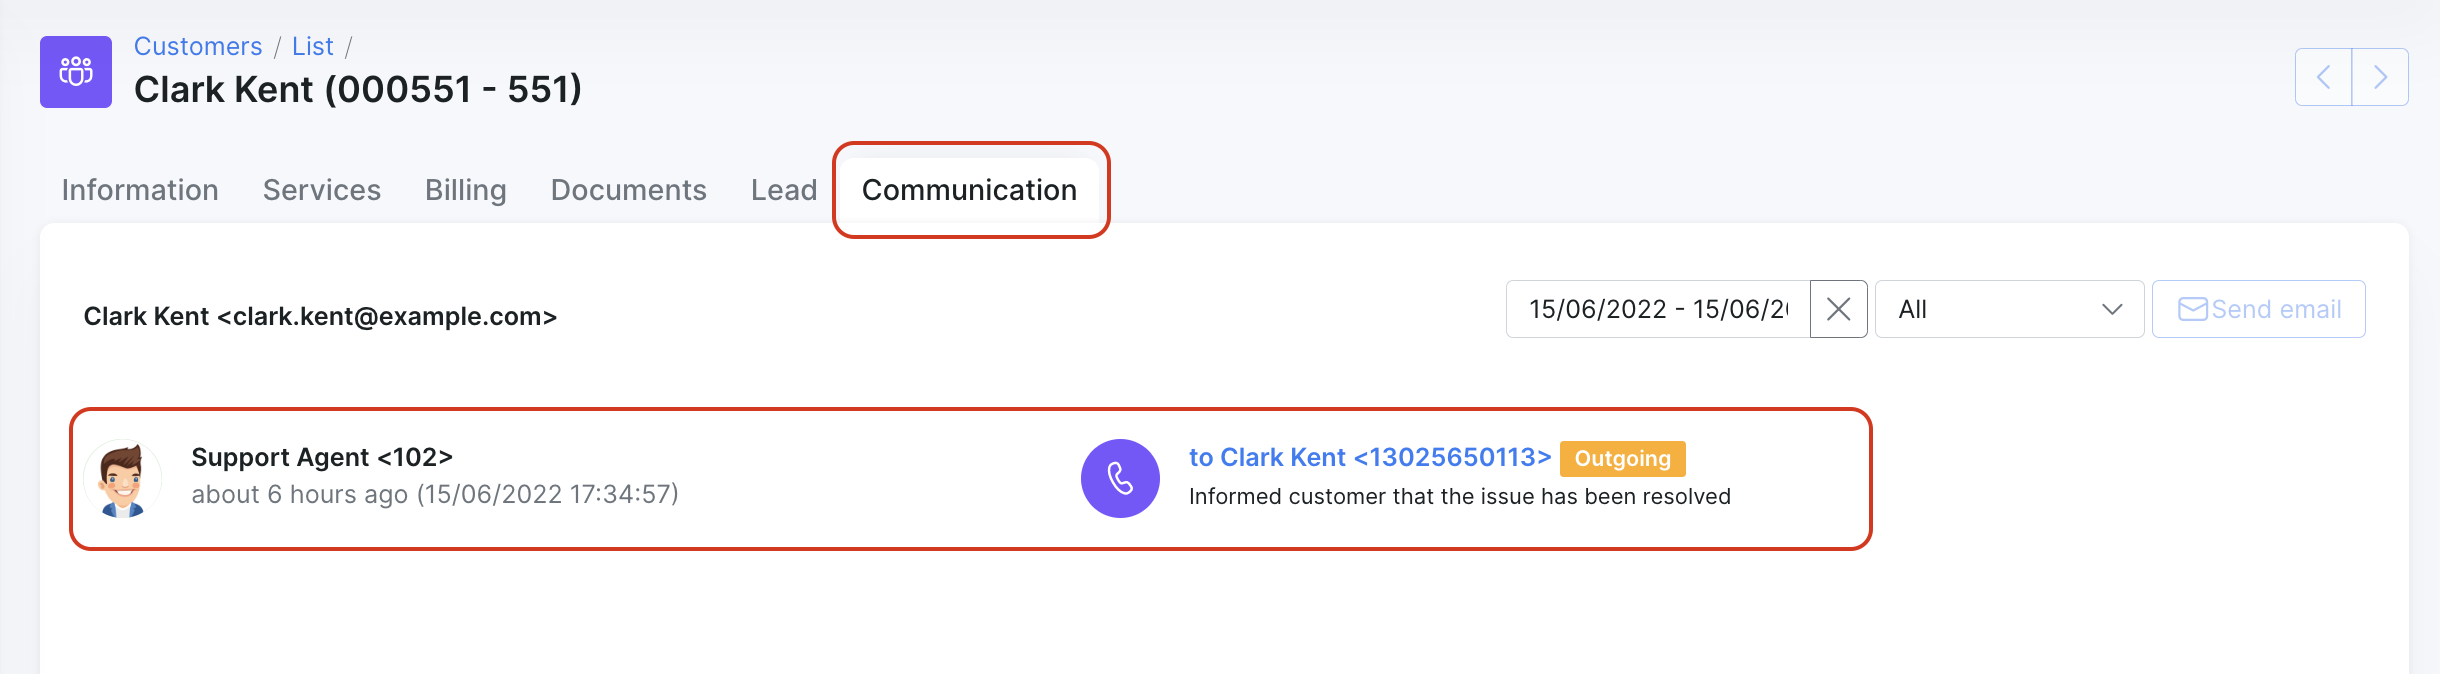 Communication tab on customer profile in Splynx